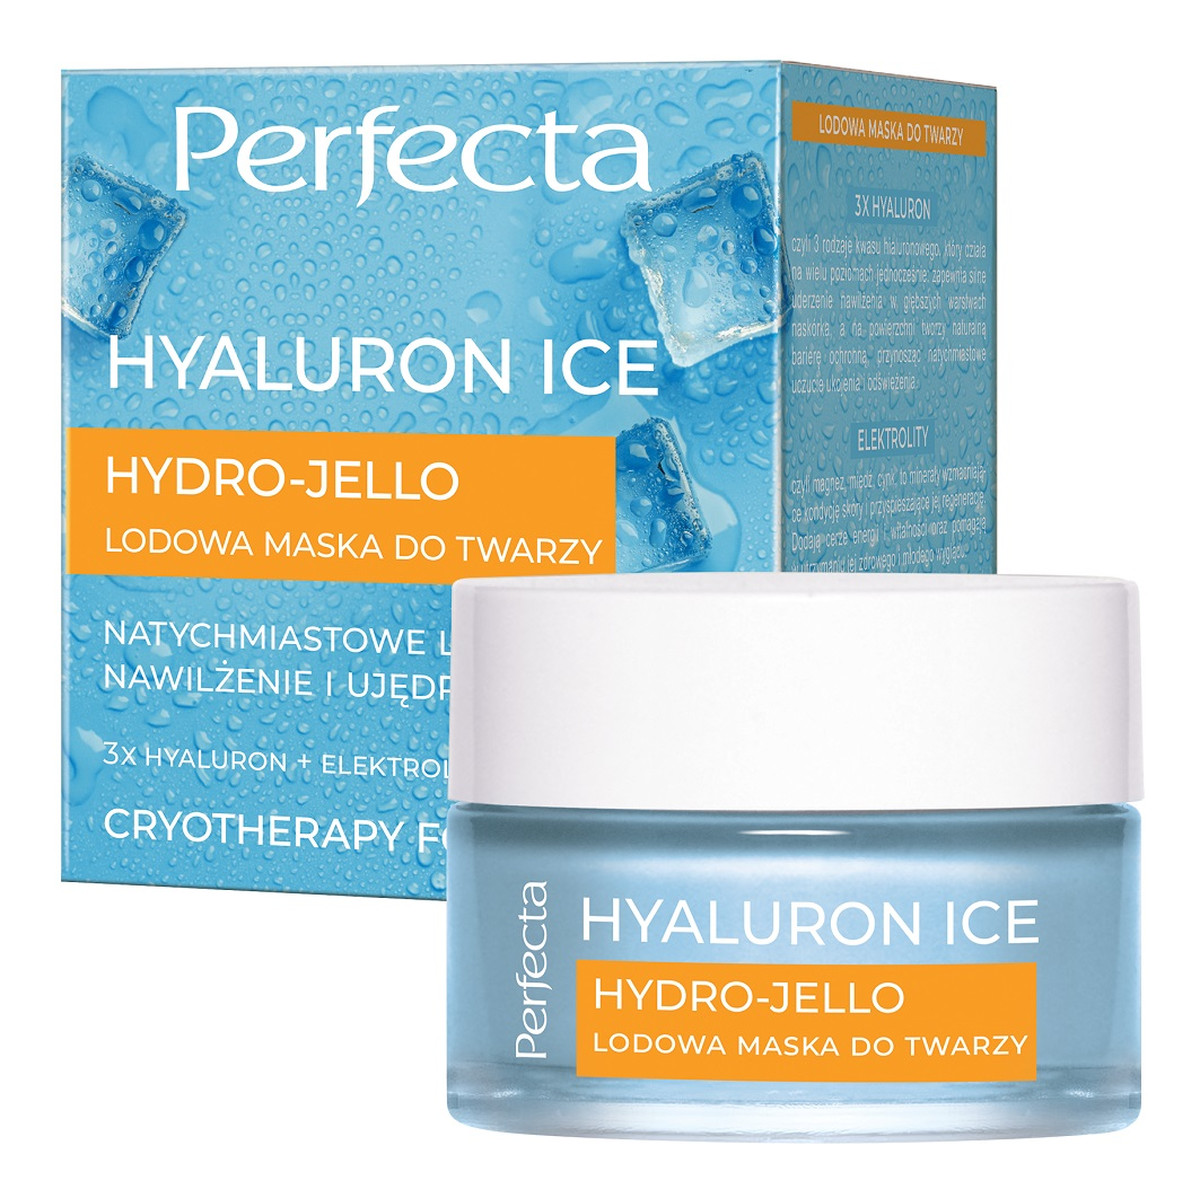 Perfecta Hyaluron ice hydro-jello lodowa maska do twarzy 50ml